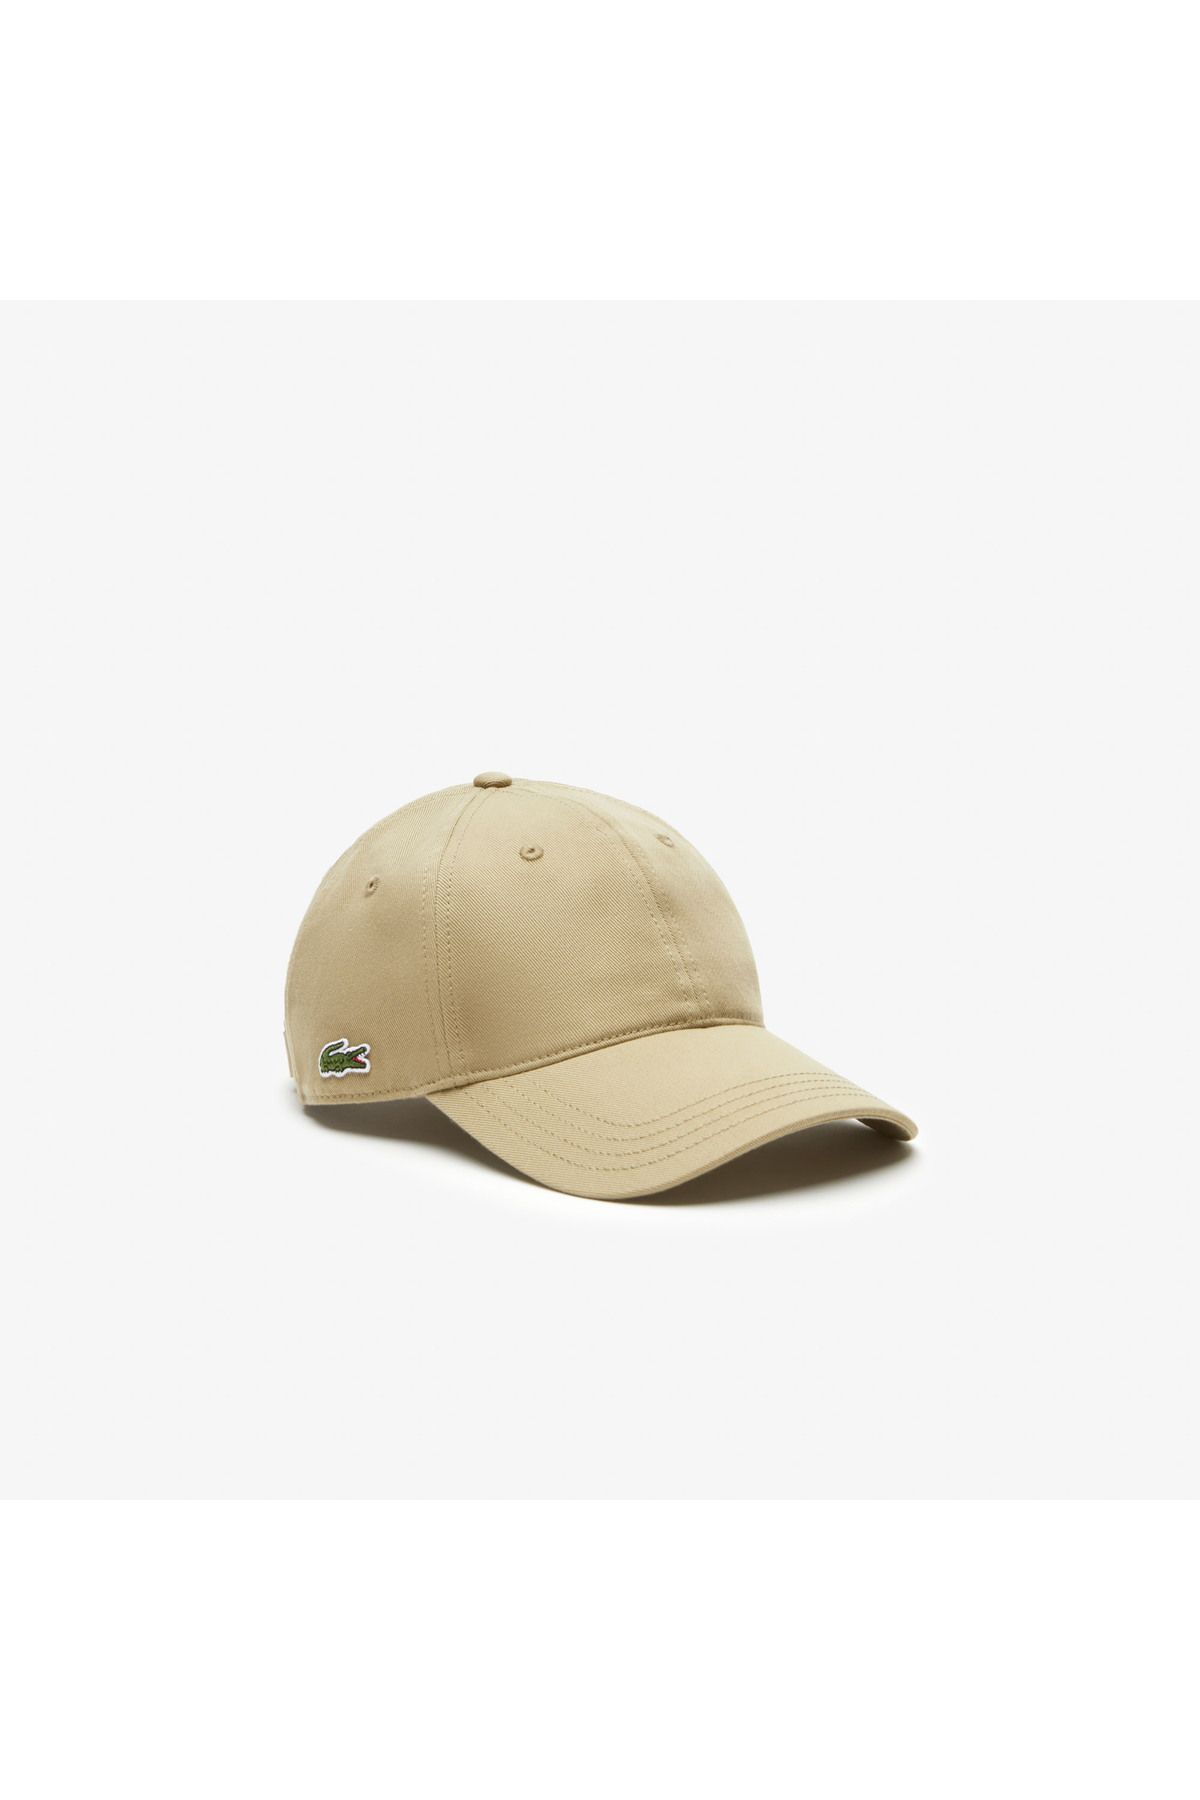 Lacoste Unisex Kahverengi Şapka